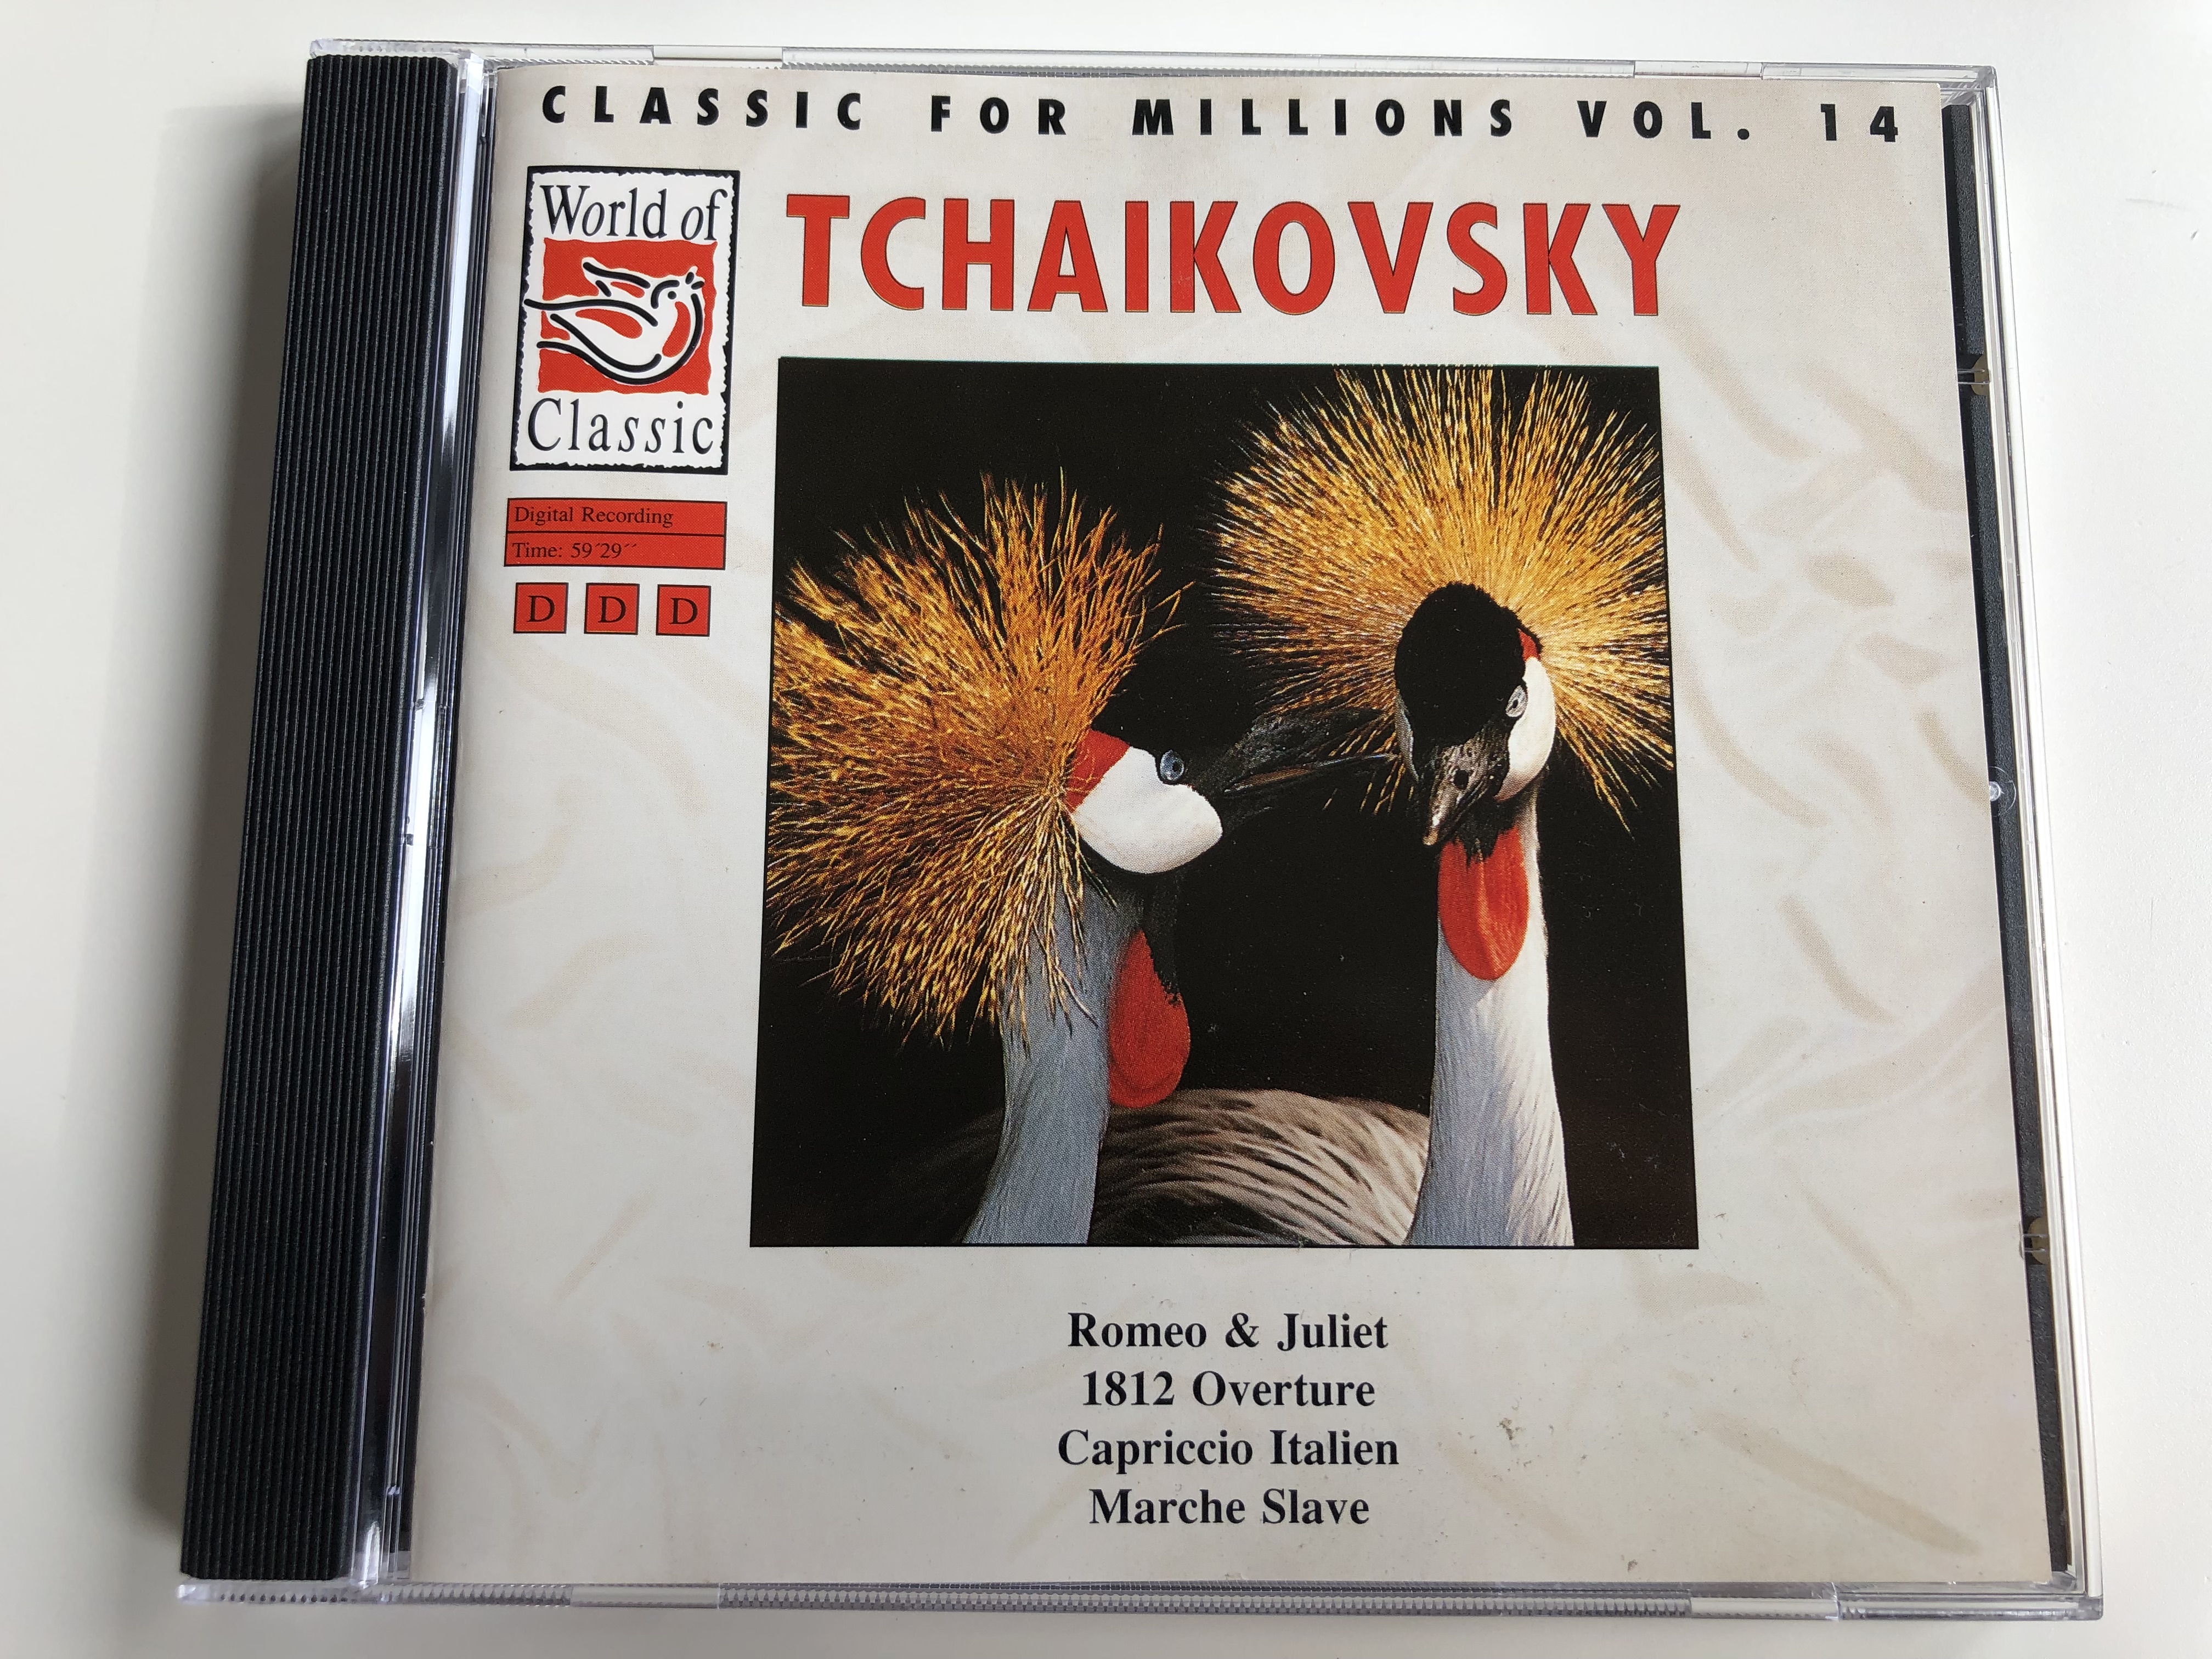 classic-for-millions-vol.-14-tchaikovsky-romeo-juliet-1812-overture-capriccio-italien-marche-slave-ddd-audio-cd-bs-1014-1-.jpg